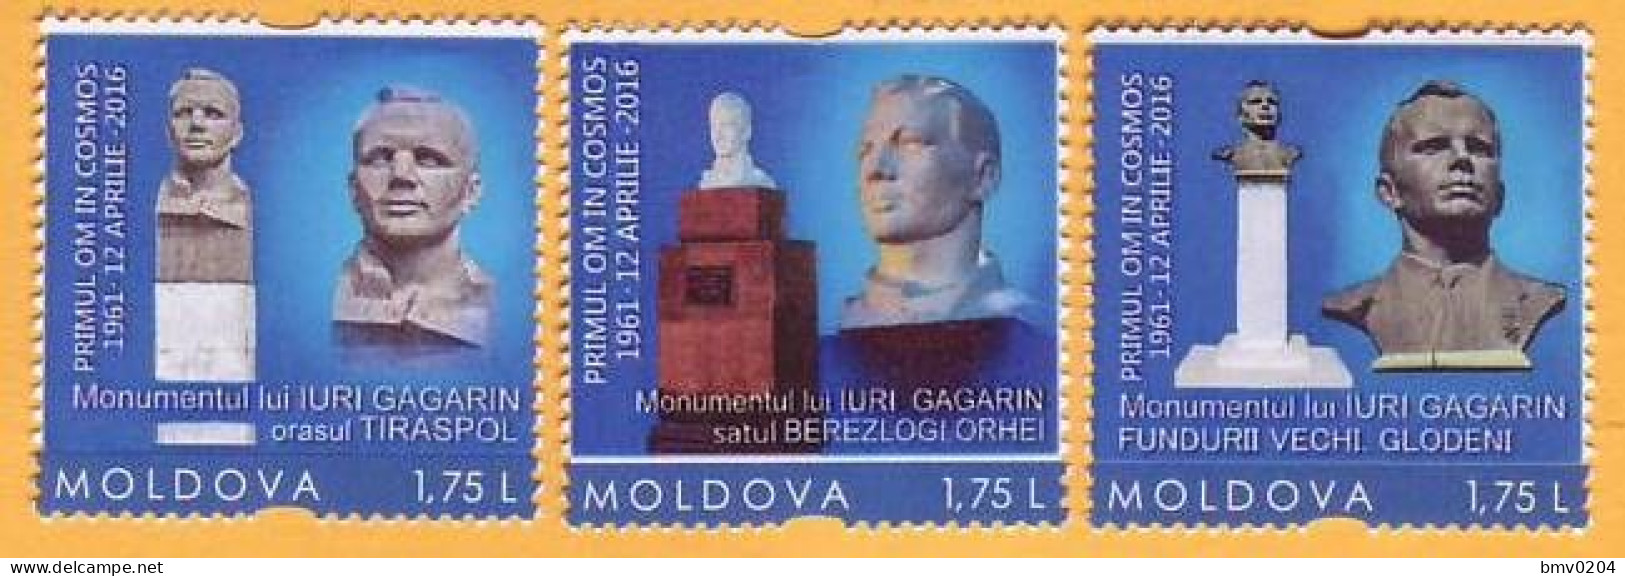 2016 Moldova Moldavie Moldau  Russia  Yuri Gagarin. Personalized Stamps. Space. Monument To Gagarin 3v Mint. - Moldavië